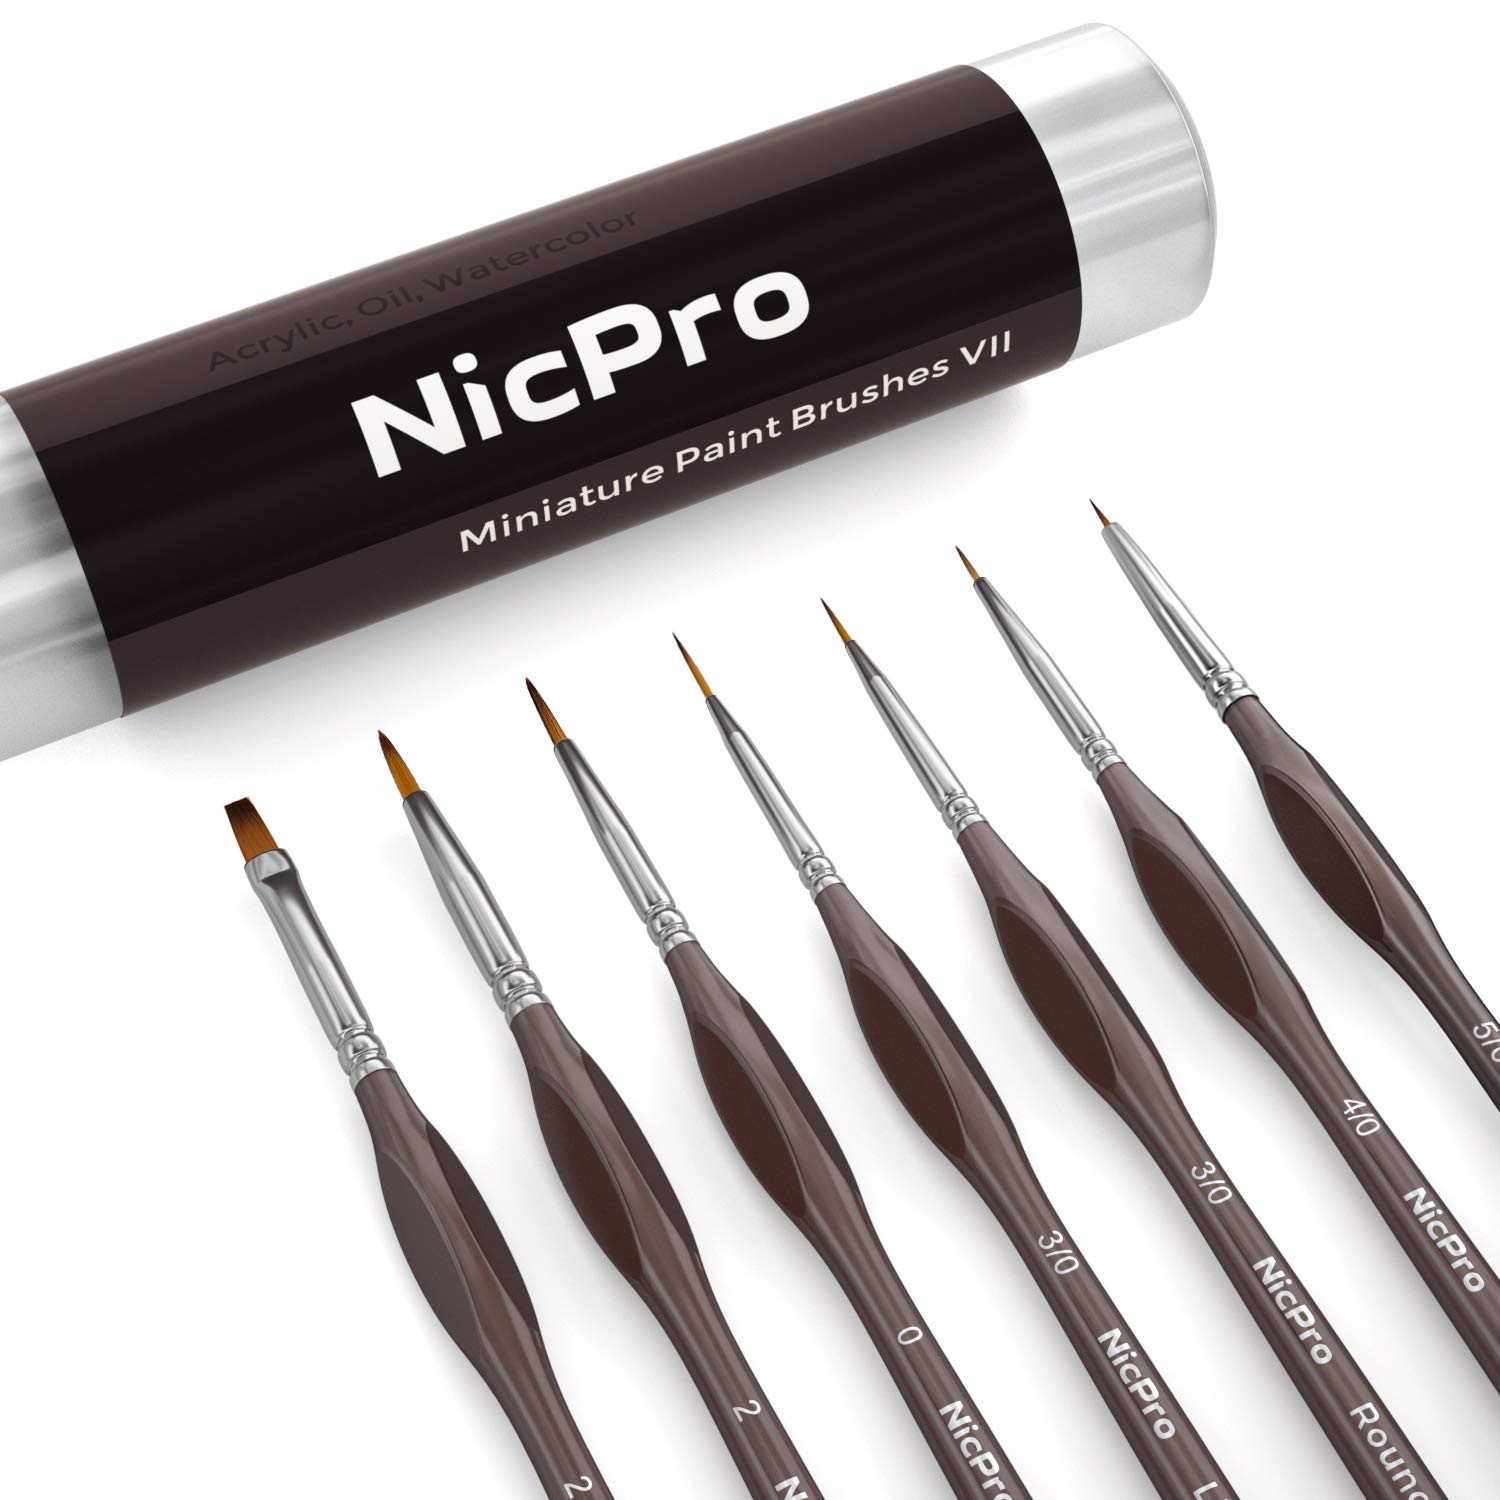 Nicpro Miniature Detail Paint Brush Set 7 Micro Professional Small